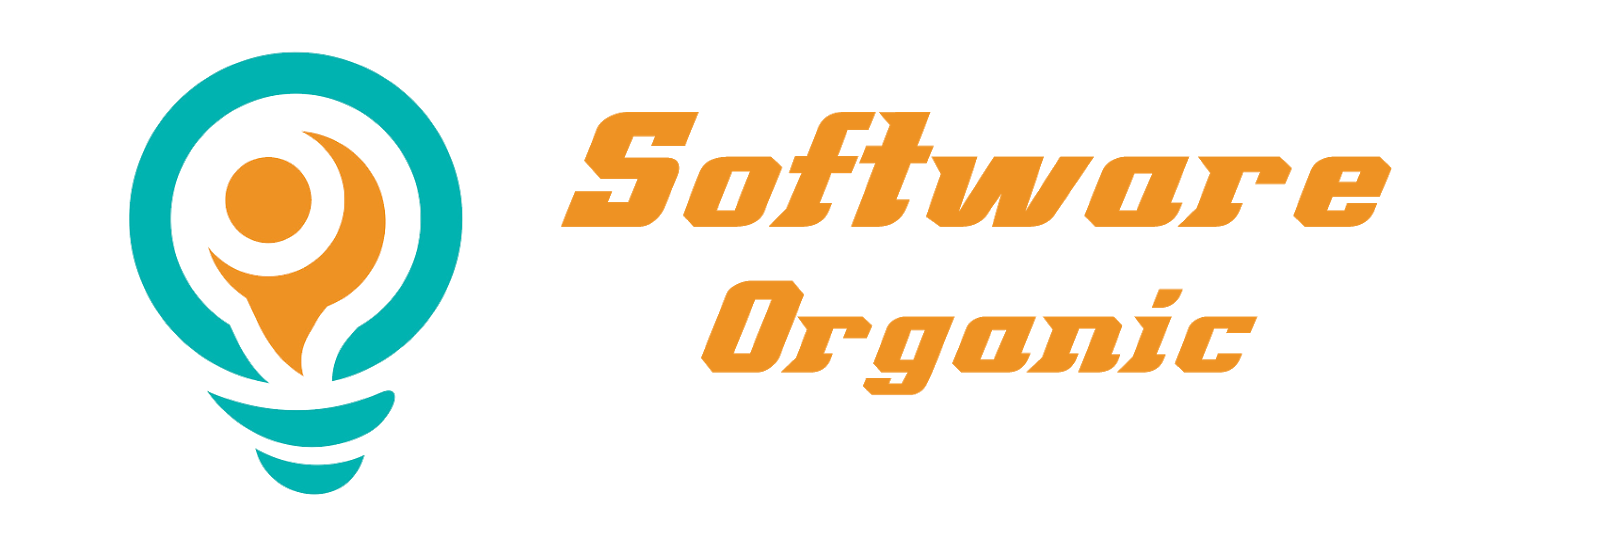 organic software